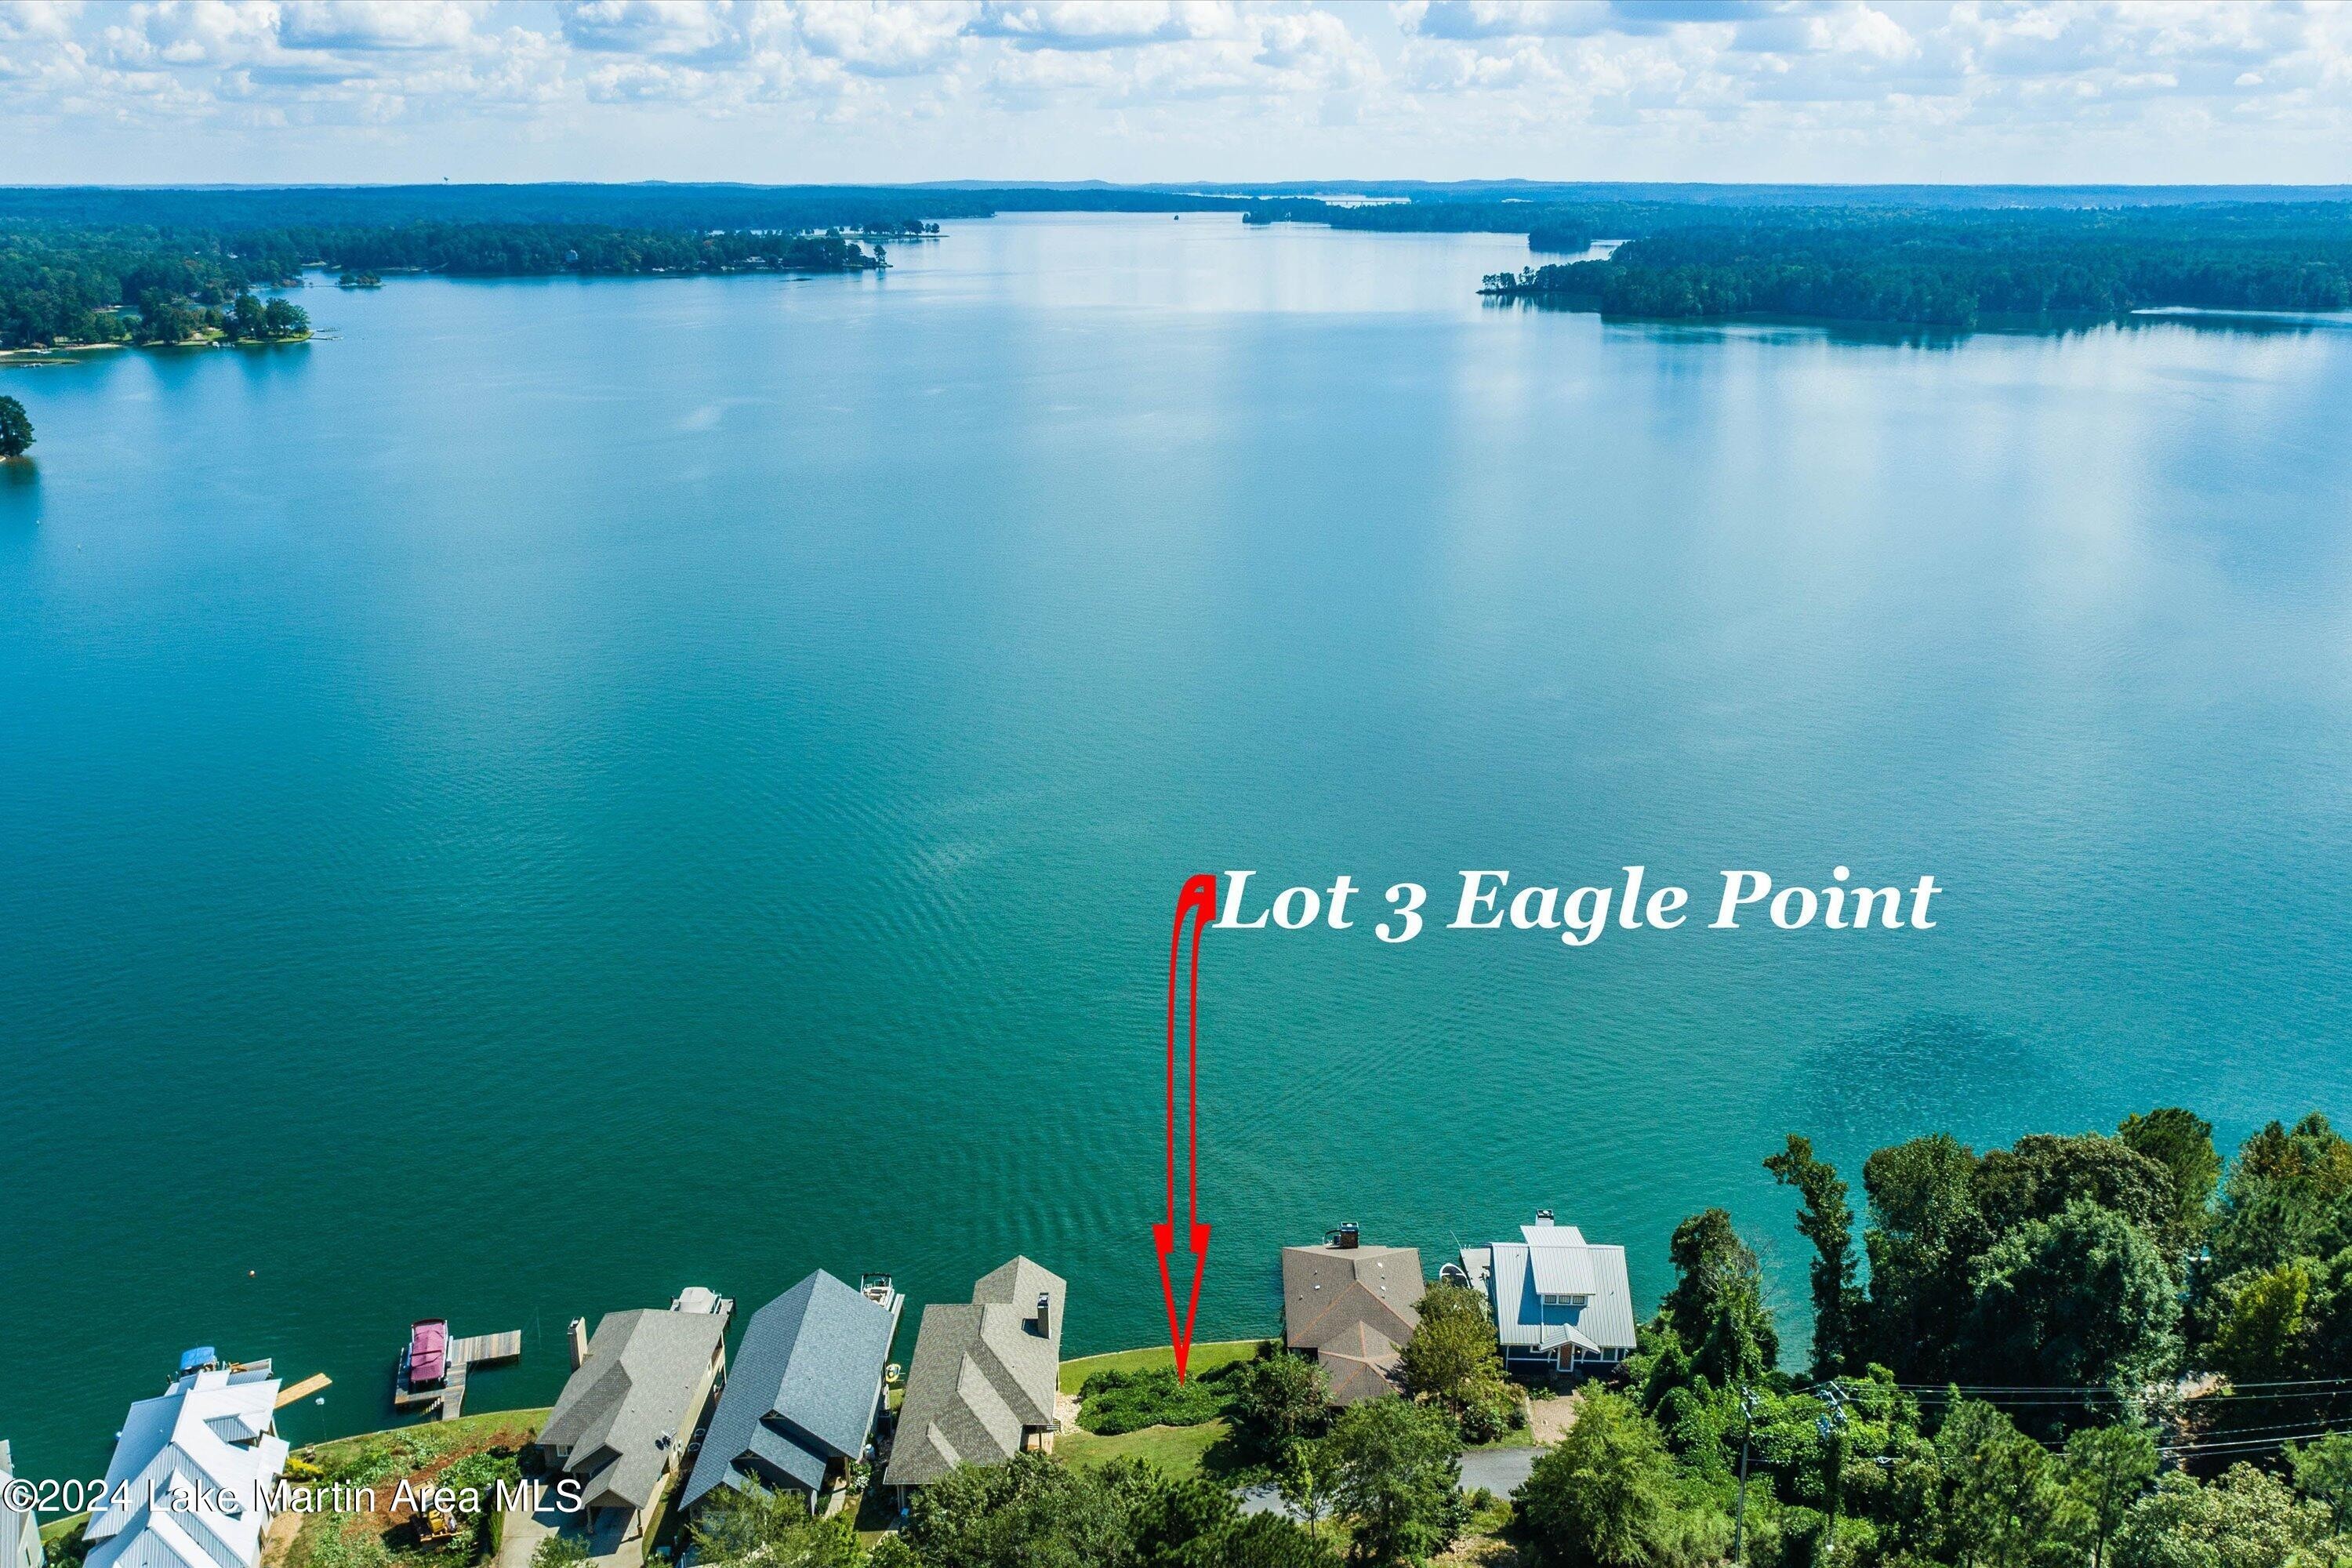 1. Lot 3 Eagle Point